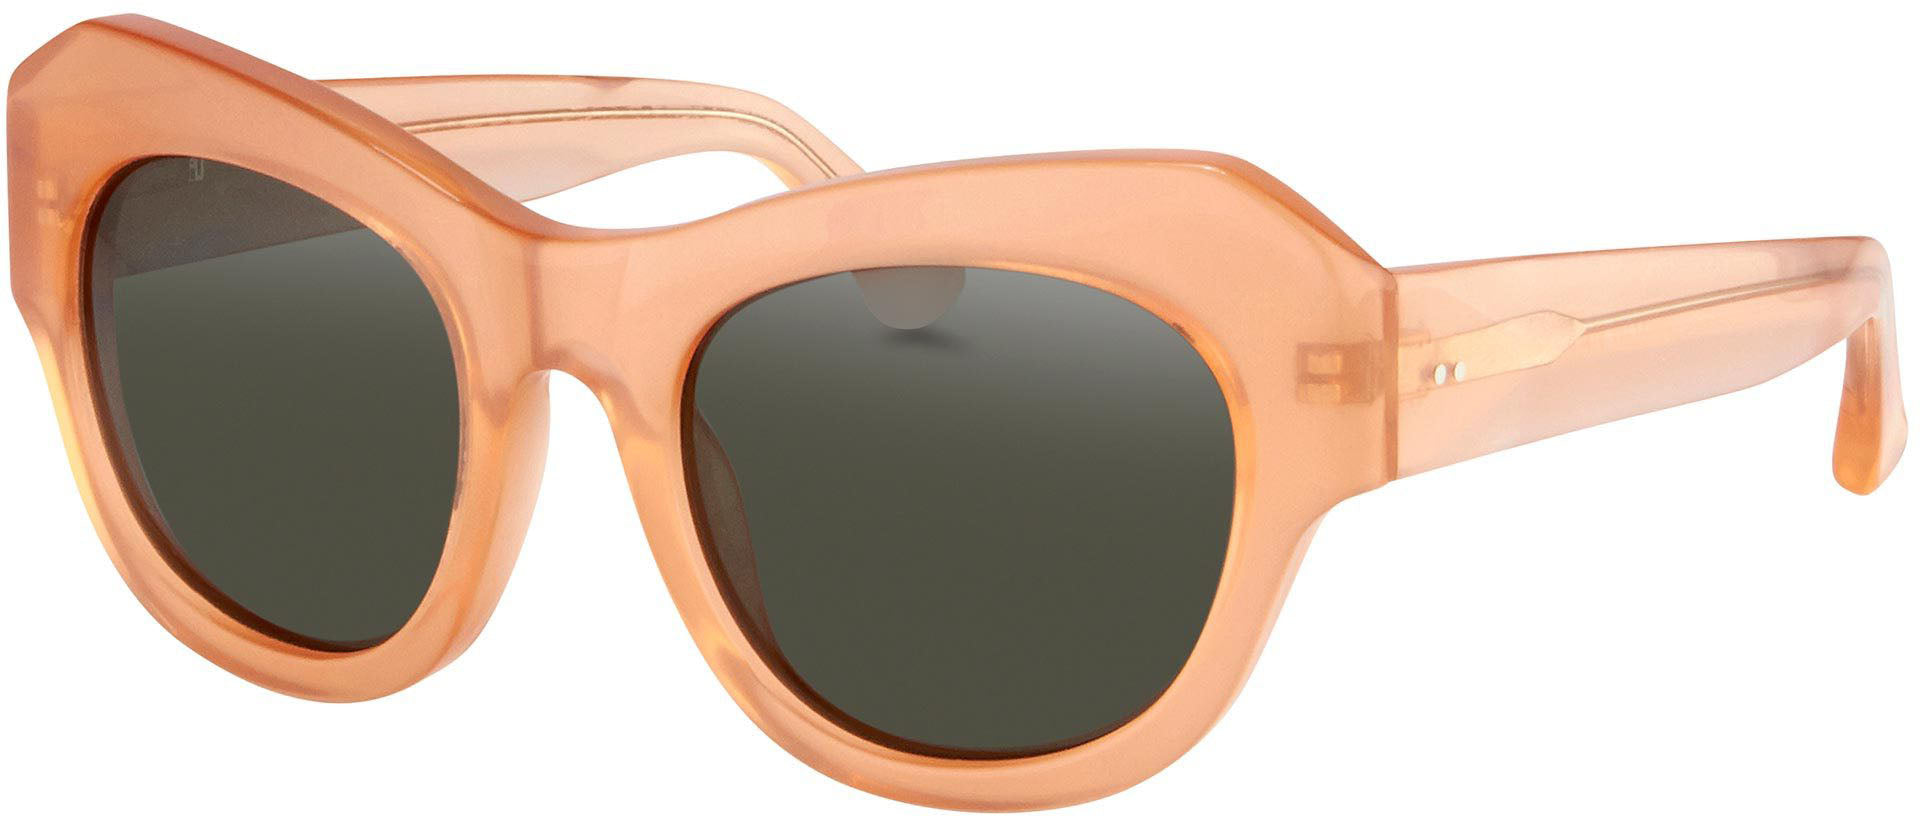 Color_DVN99C3SUN - Dries van Noten 99 C3 Angular Sunglasses